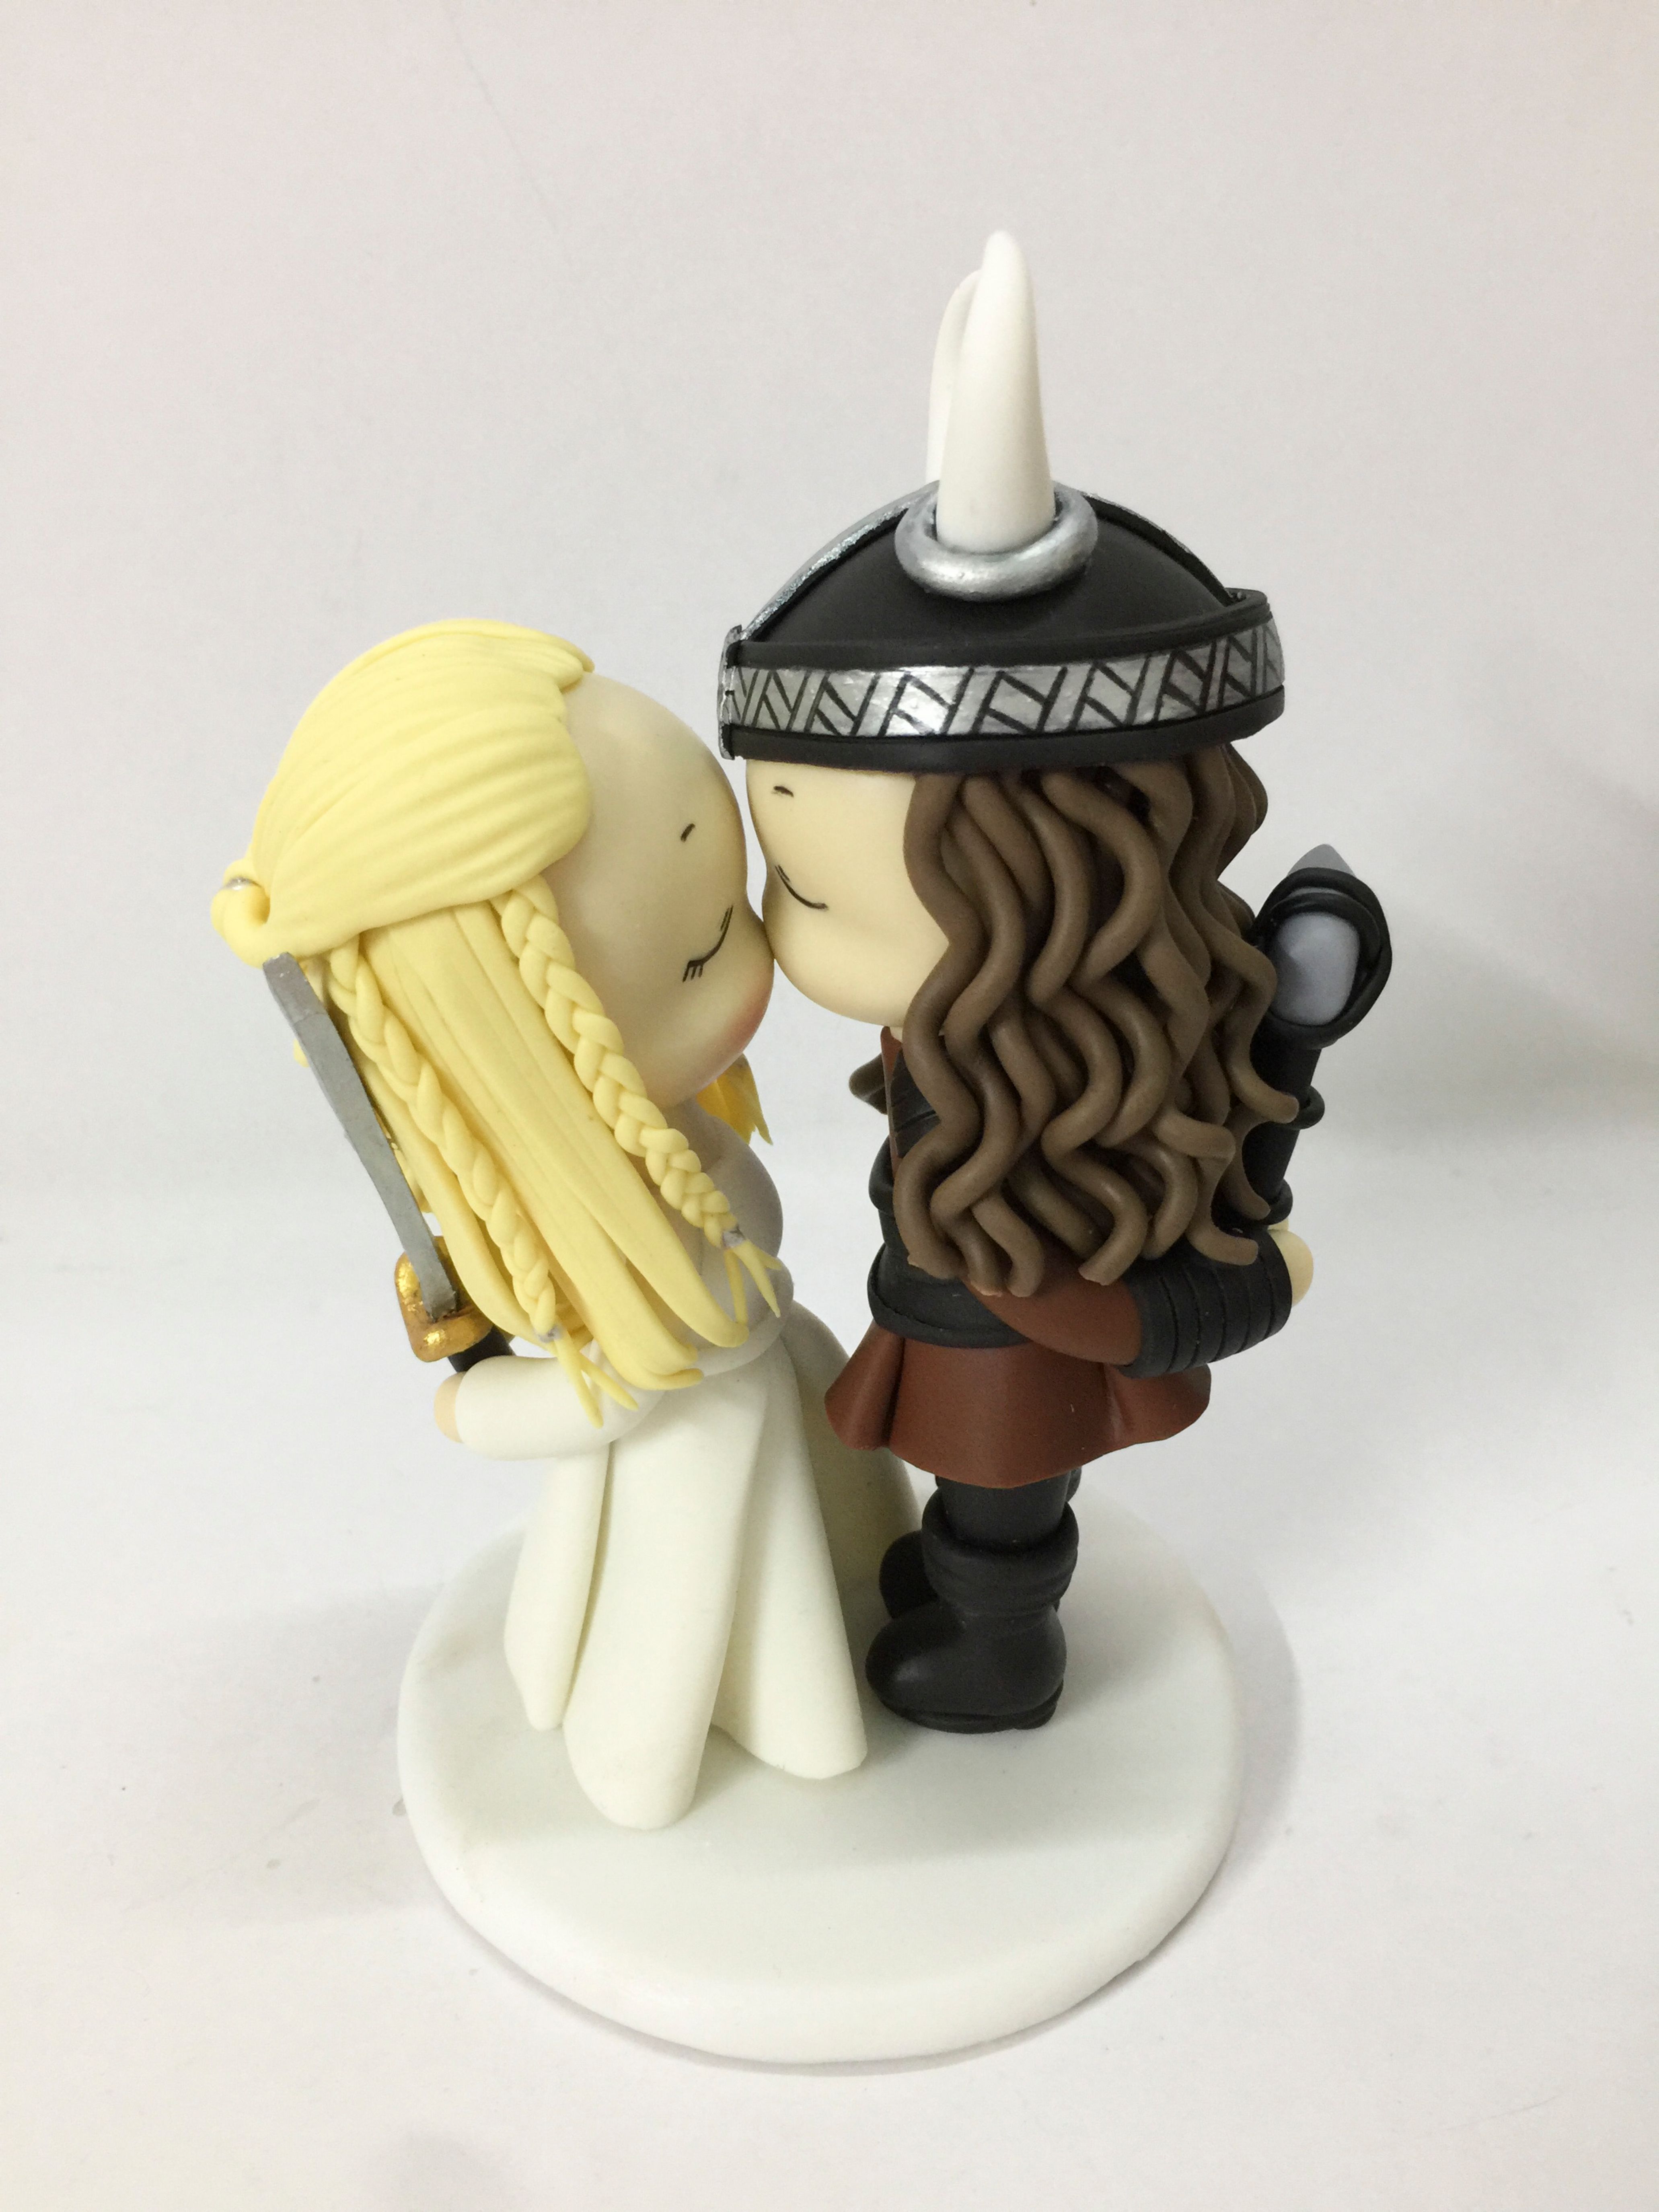 Picture of Viking Bride & Groom Wedding Cake Topper, Vikings Wedding Theme